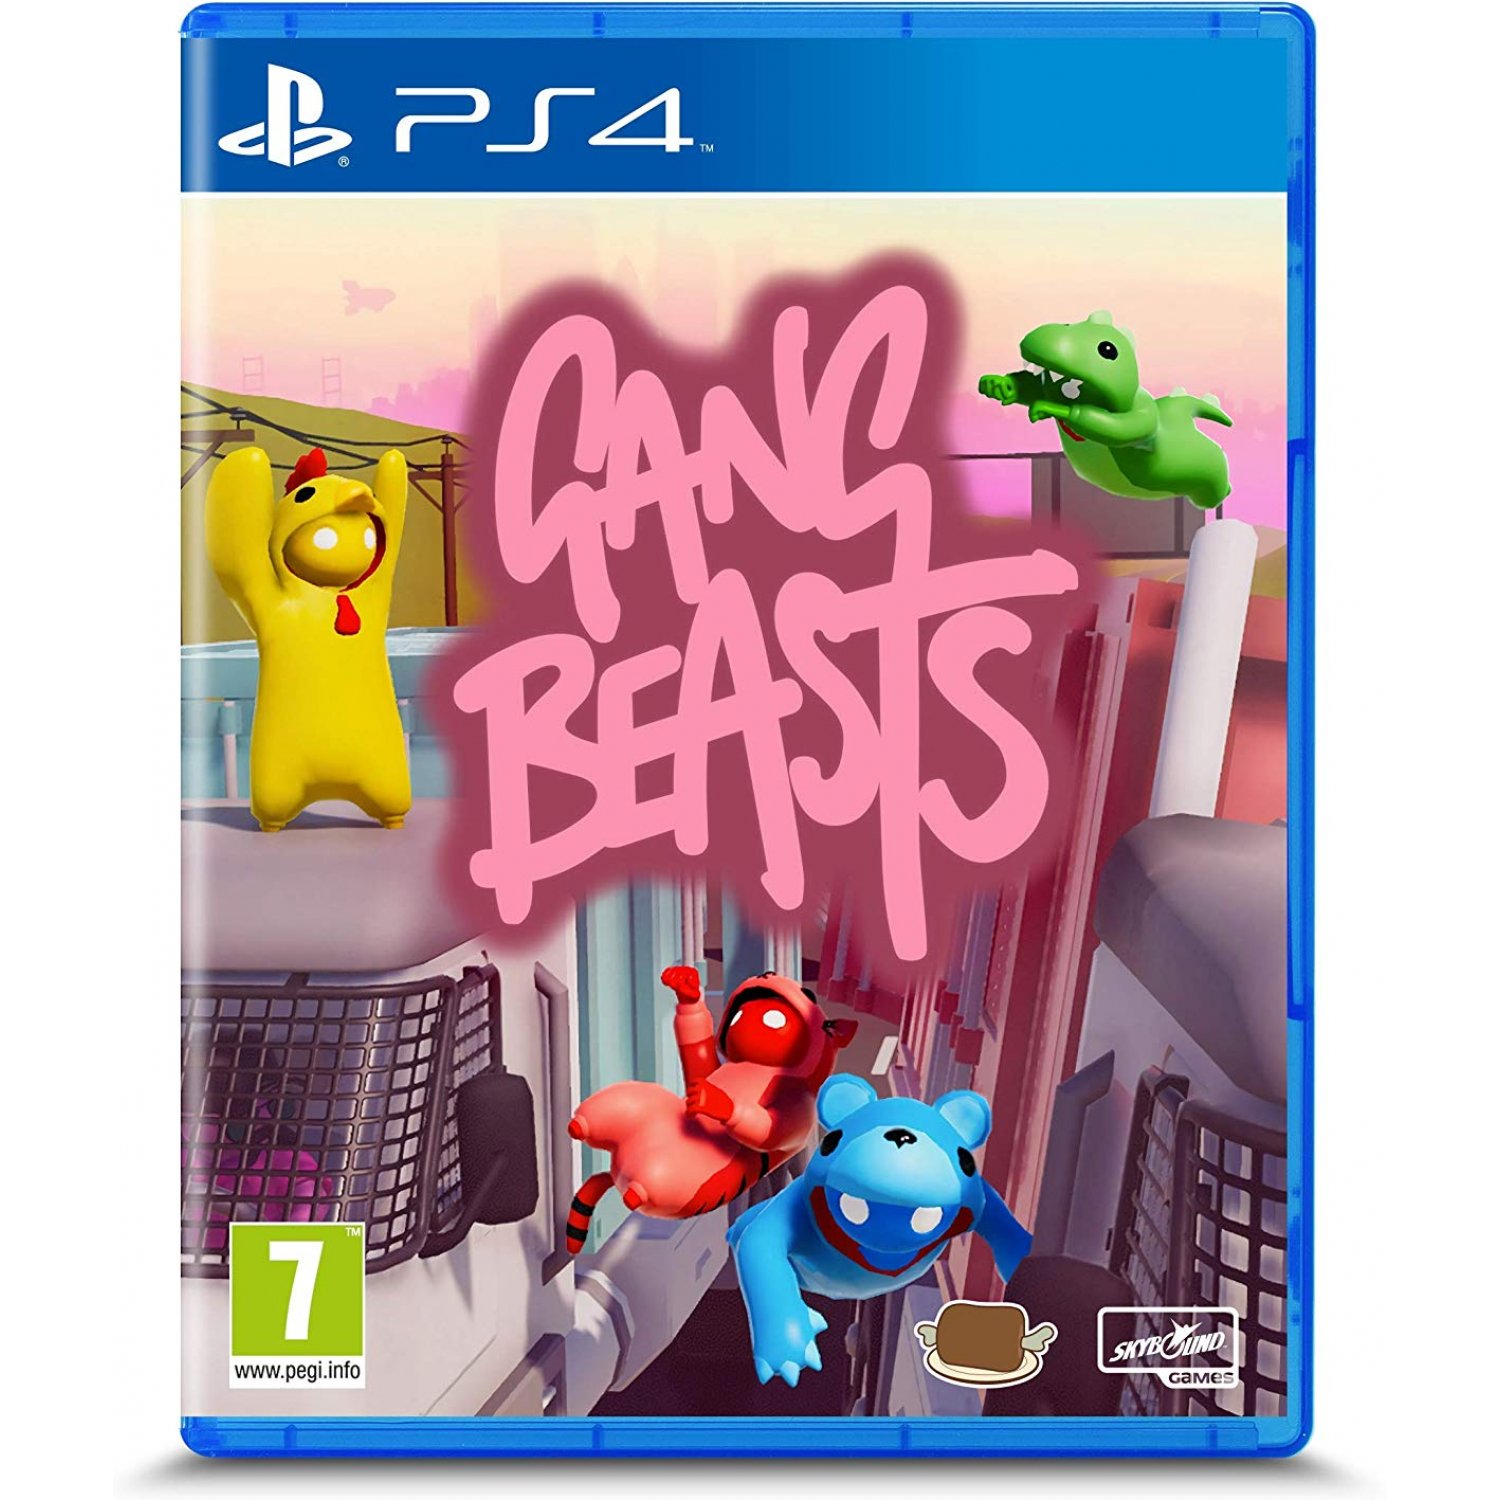 gang beasts 2 download free